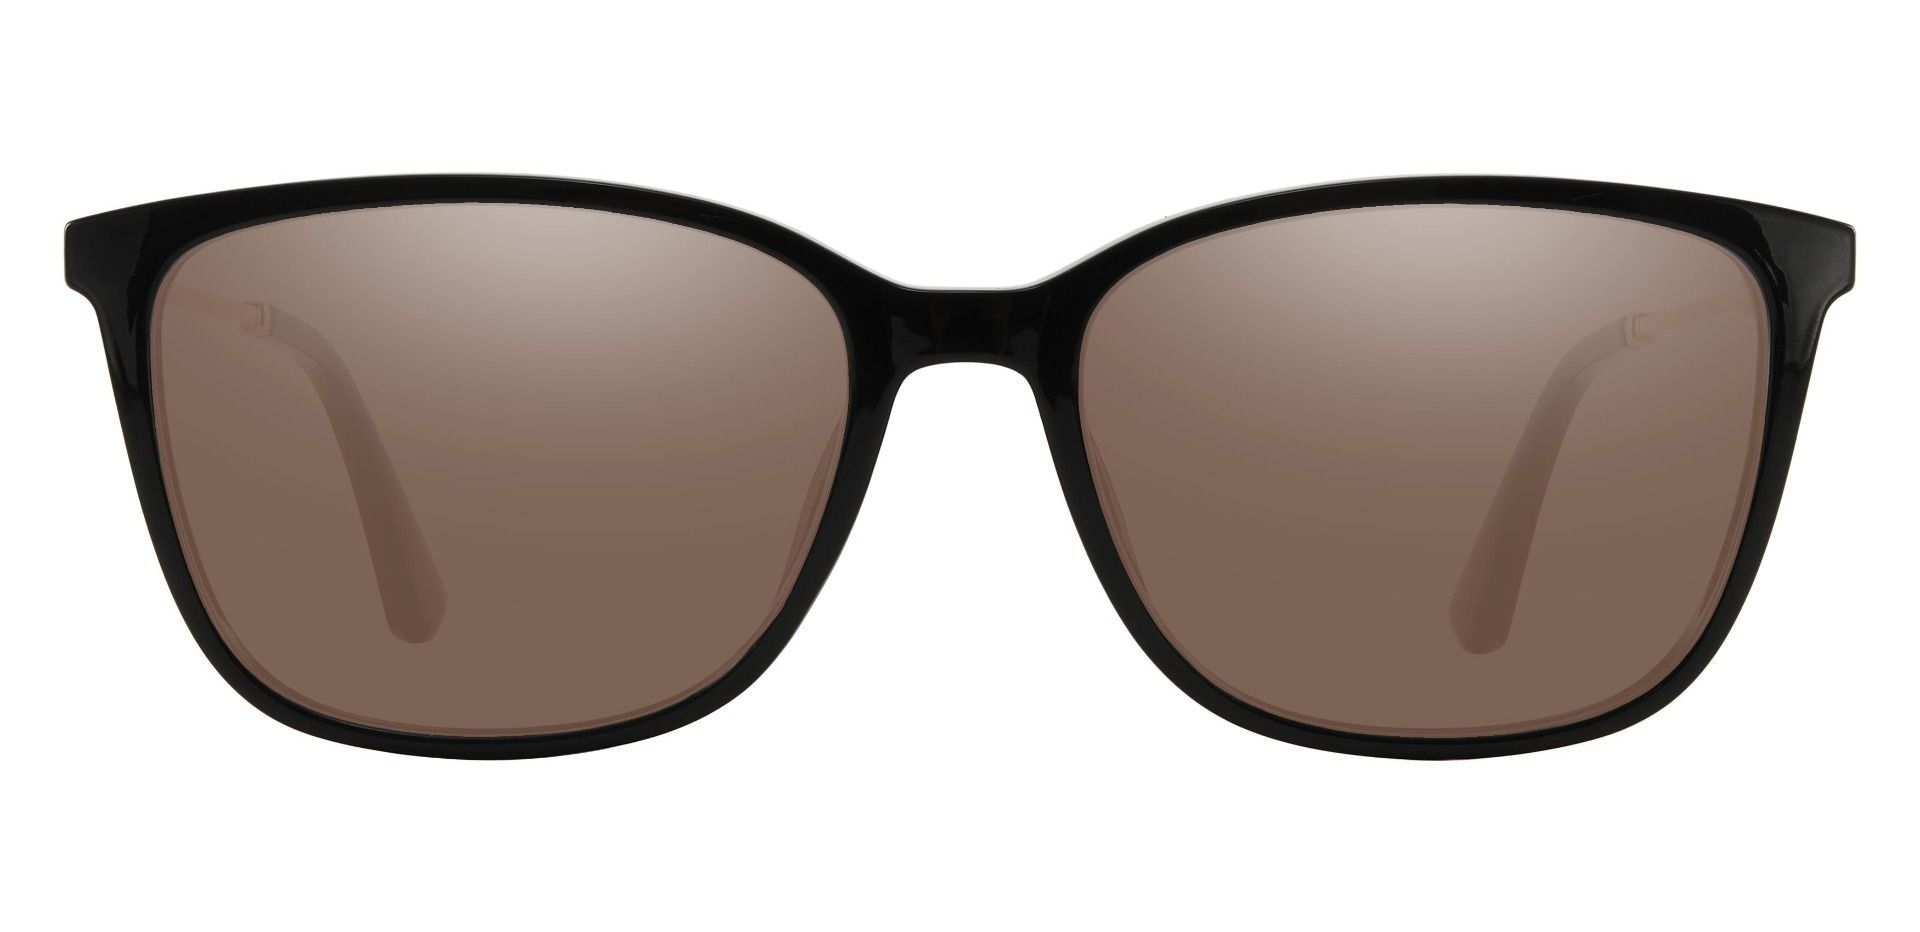 Miami Rectangle Prescription Sunglasses - Black Frame With Brown Lenses